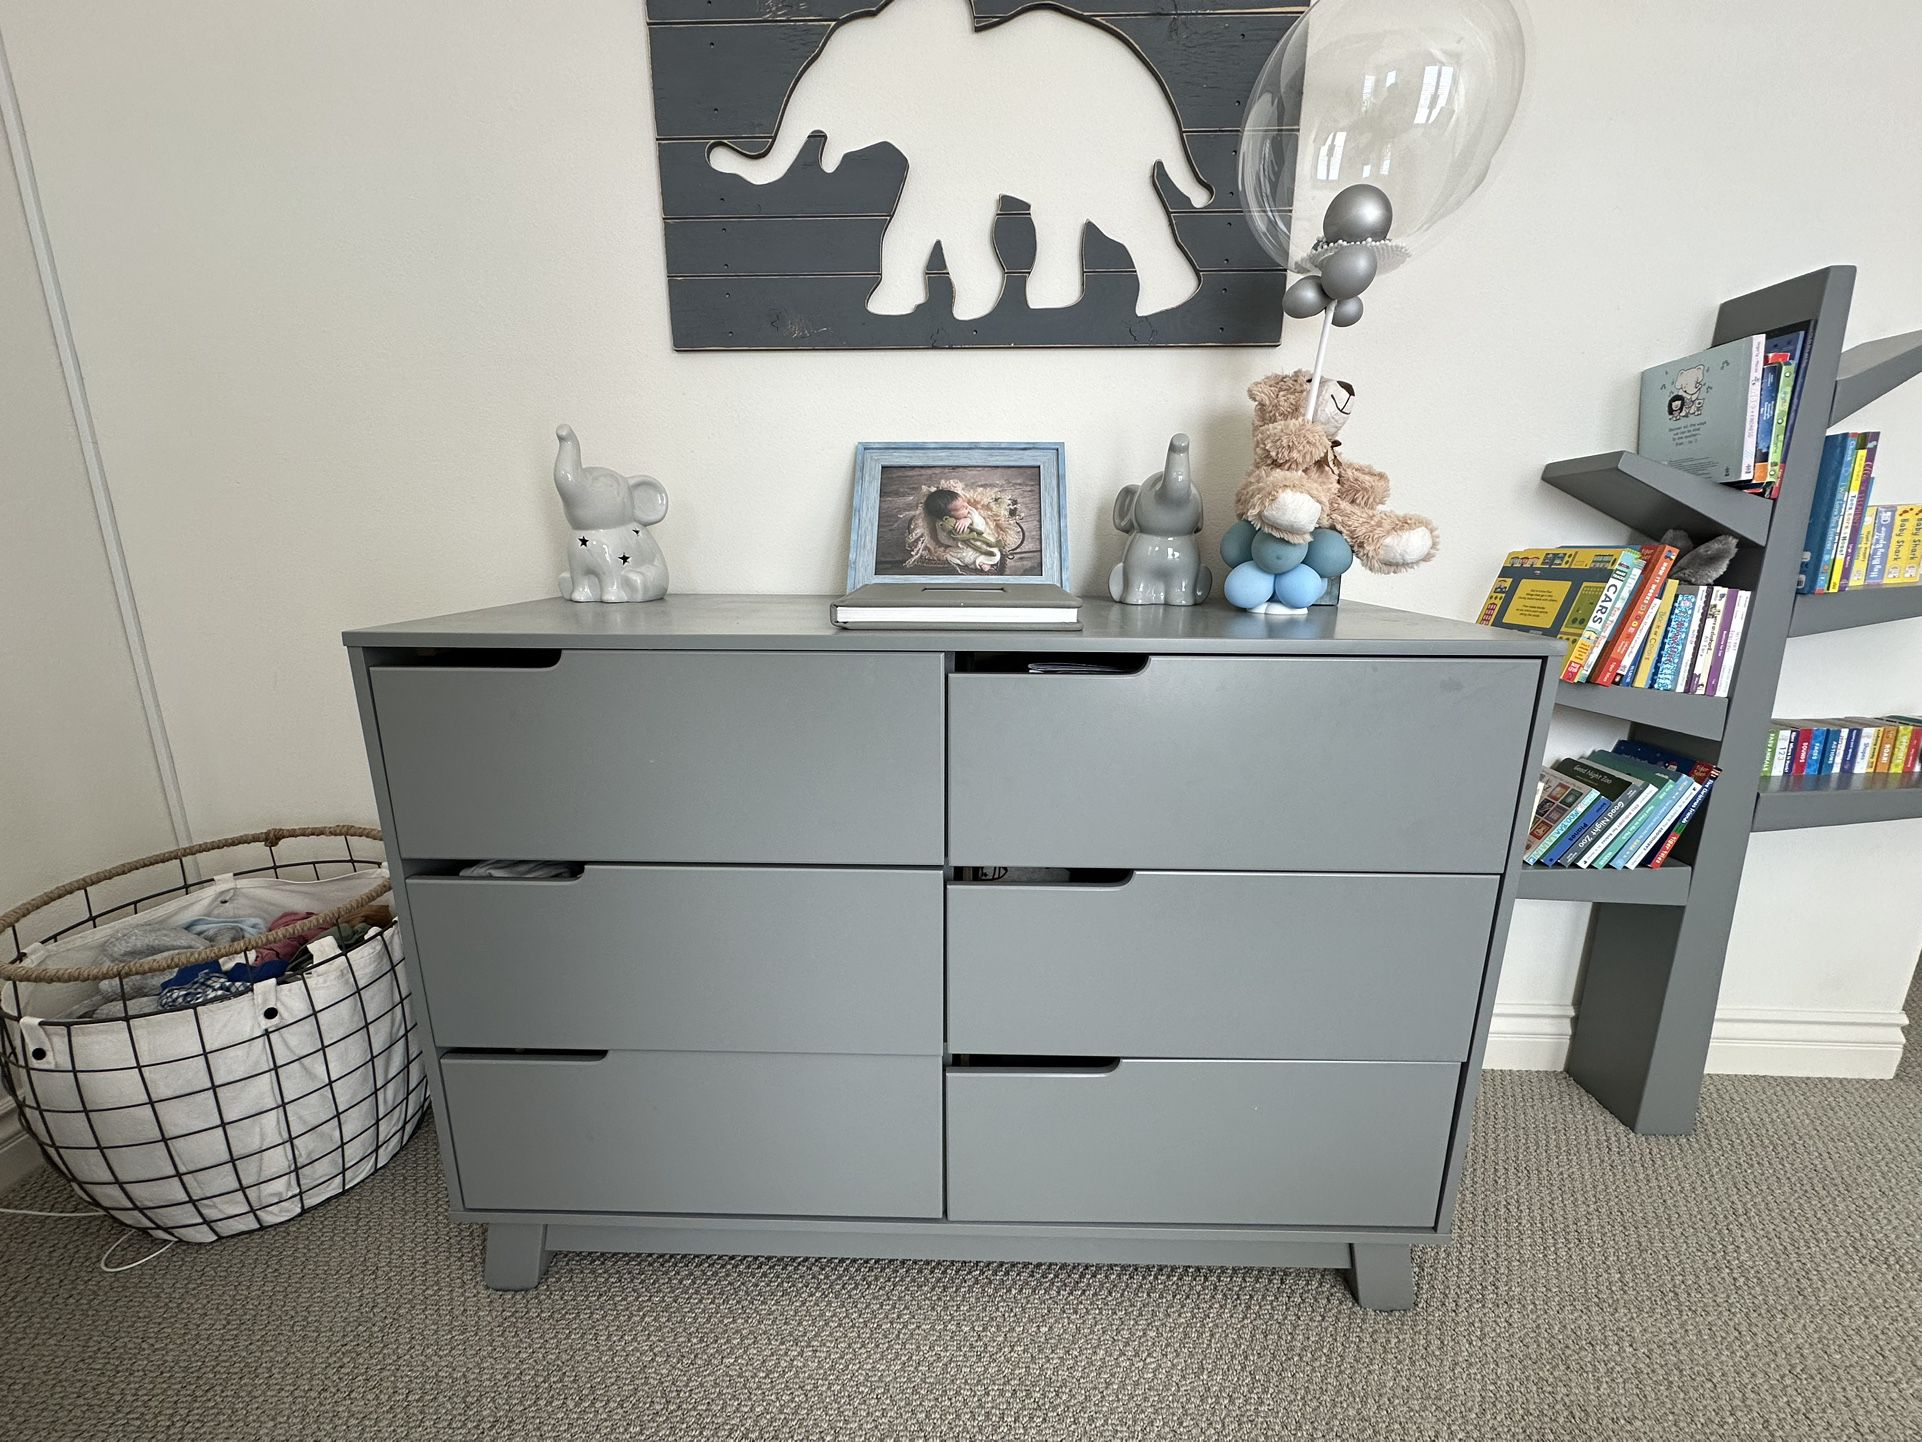 Hudson 6-Drawer Assembled Double Dresser Gray - Toddler Baby Kids Room